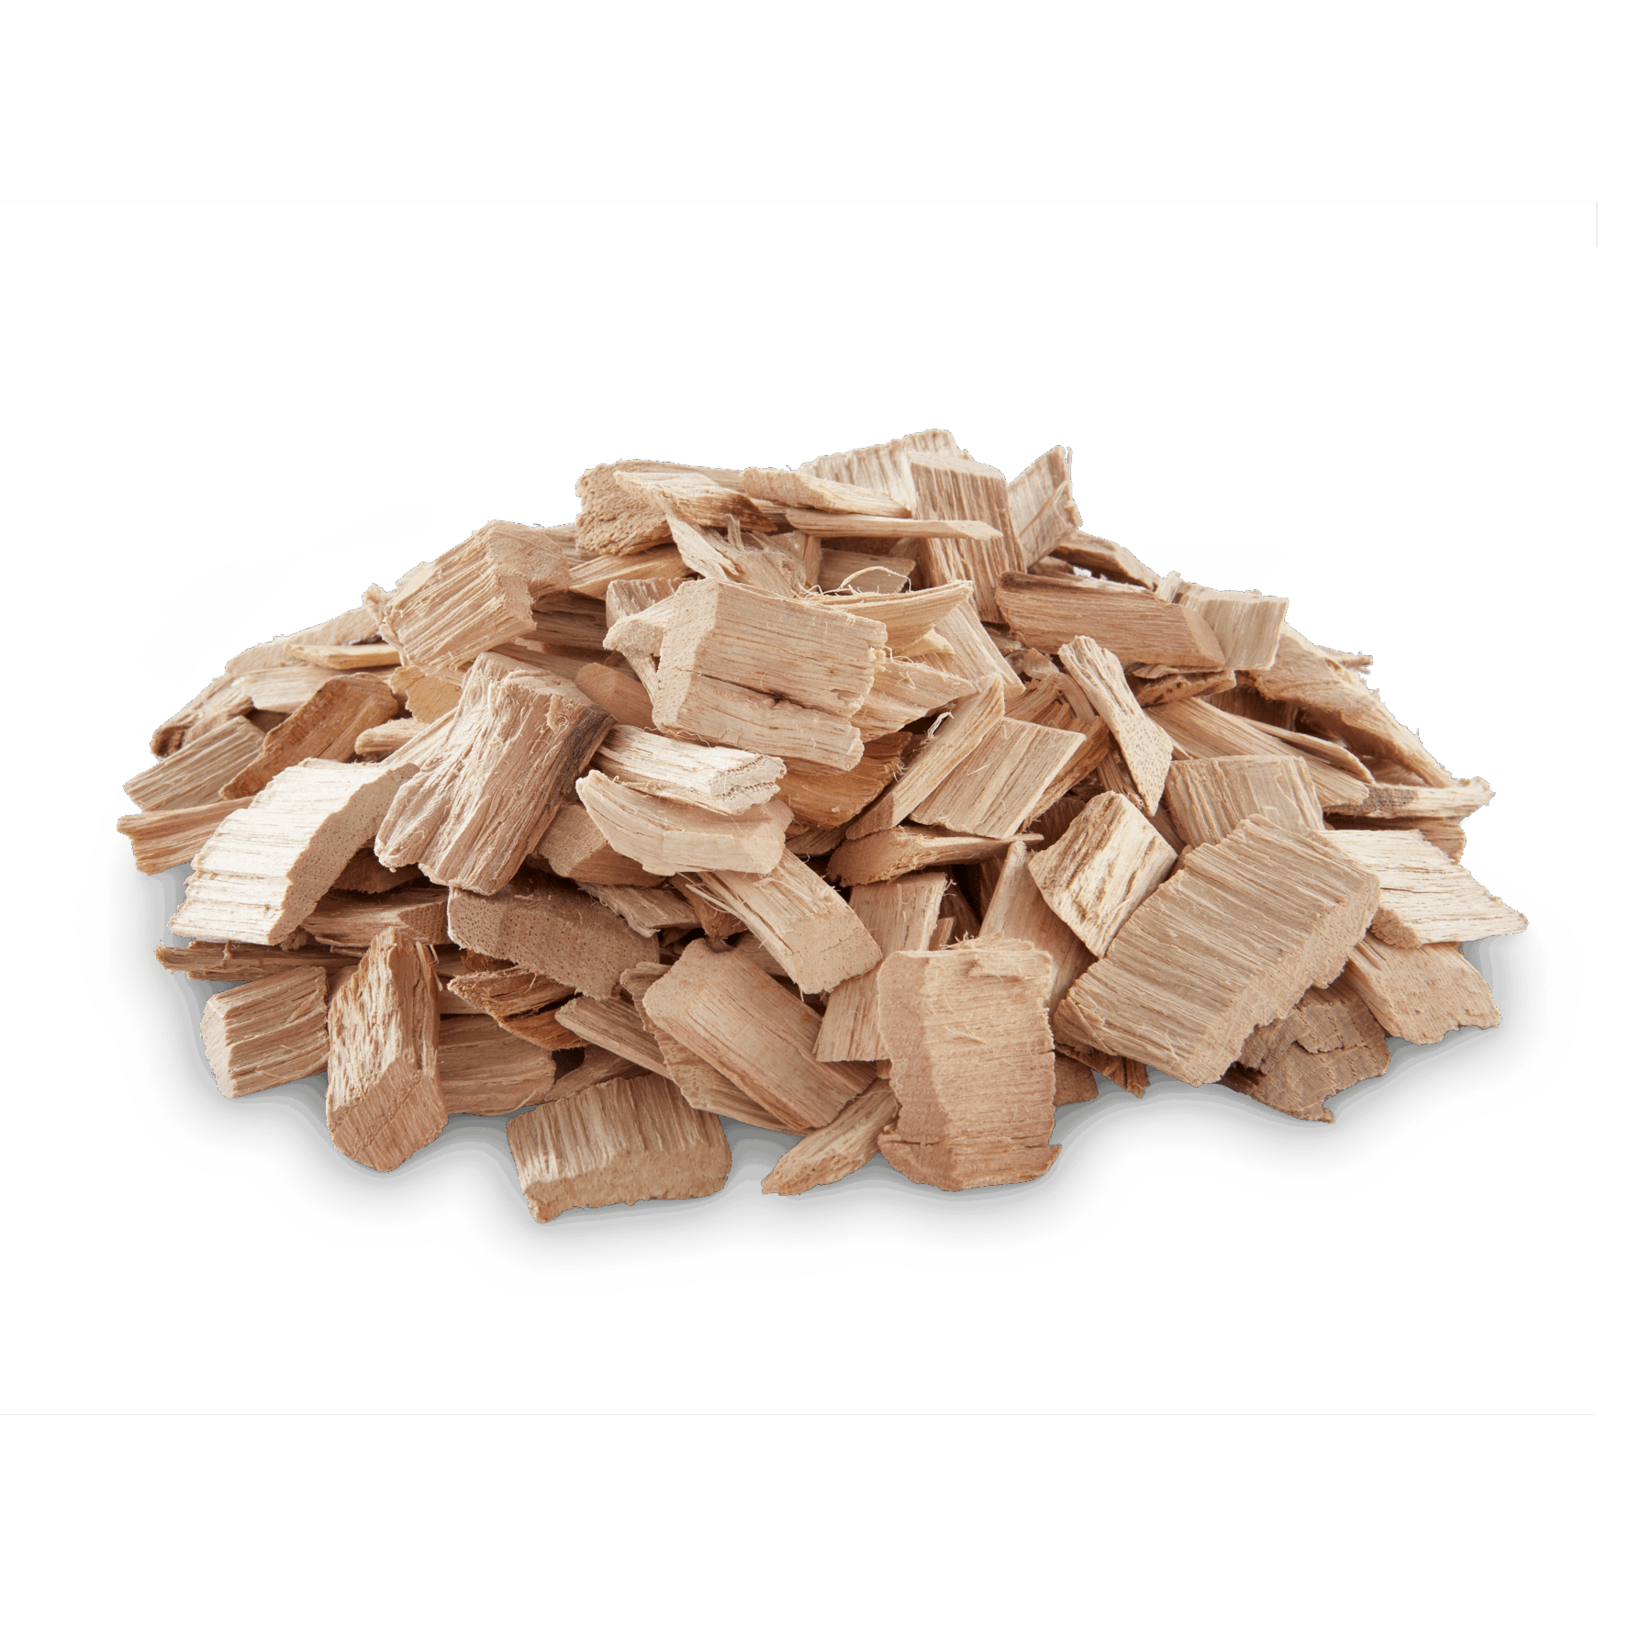 Weber Pecan Wood Chips 3L / 192 in³